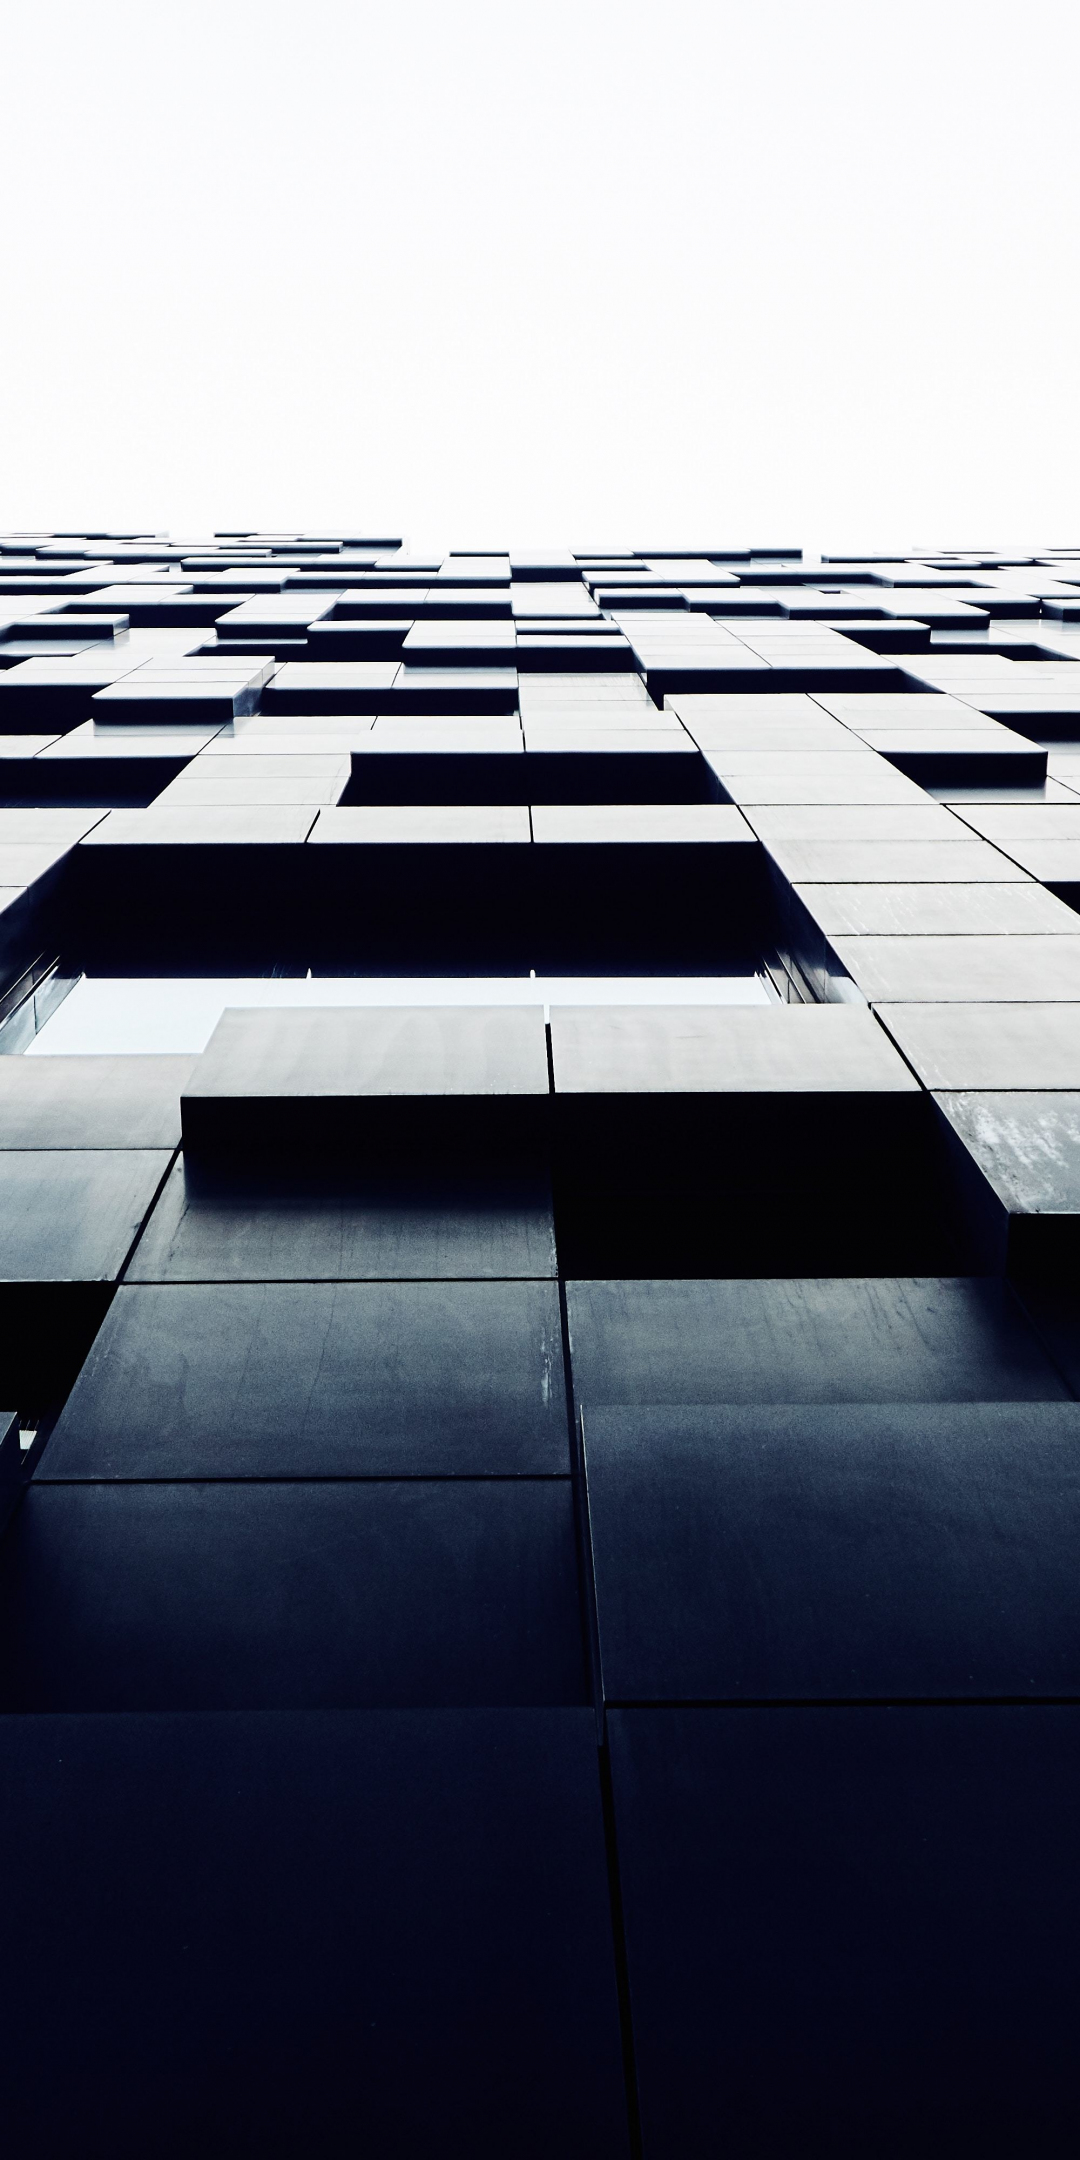 Cubical, surface, building, facade, 1080x2160 wallpaper